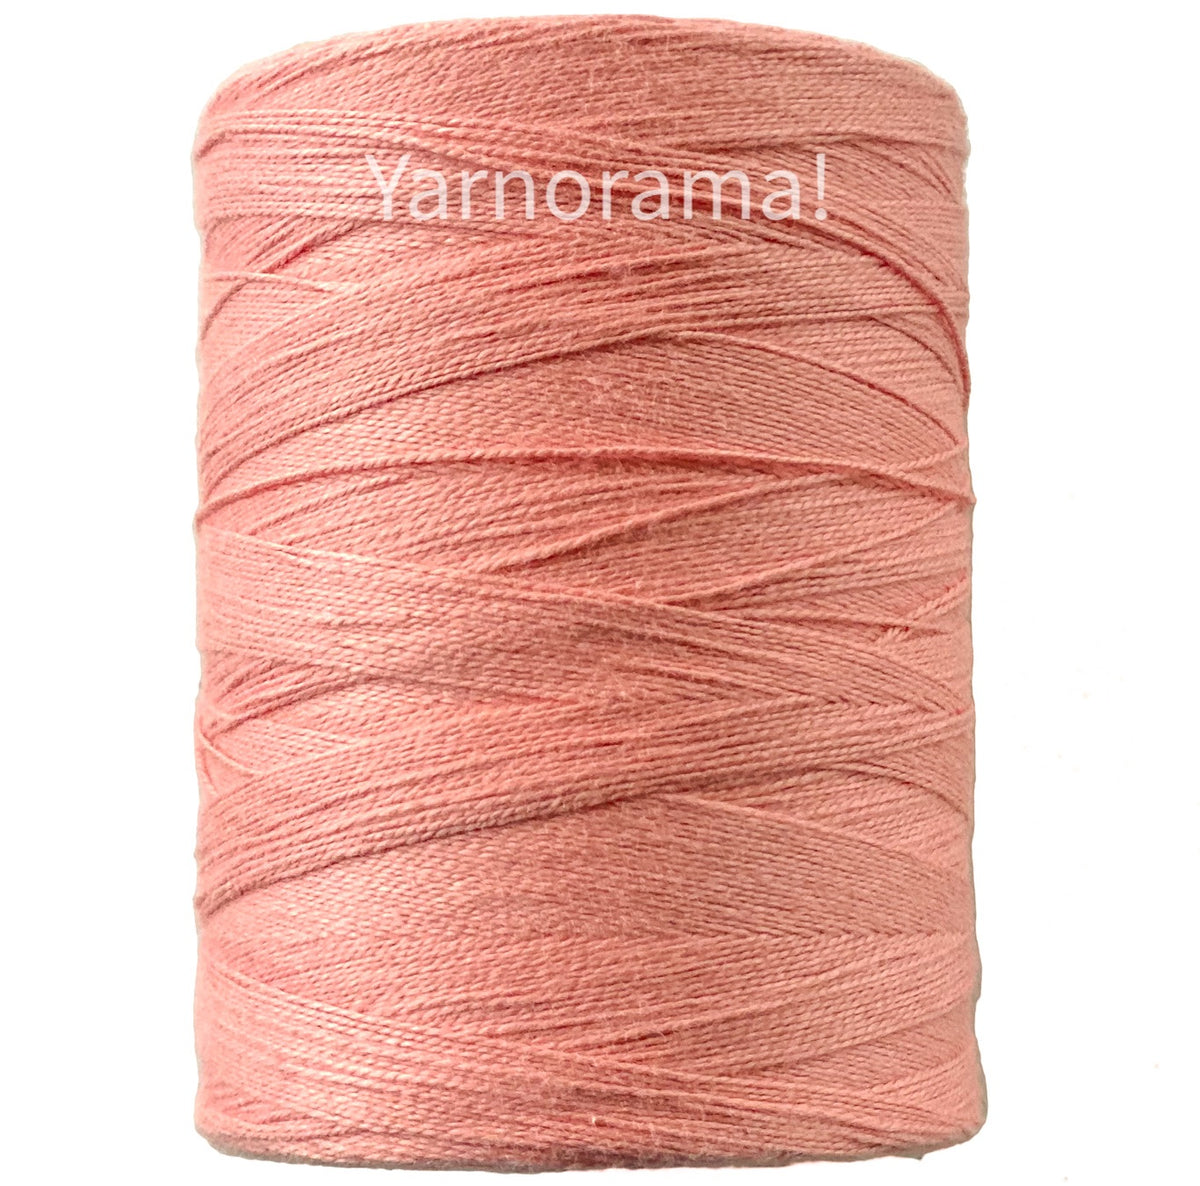 16/2 Unmercerized Cotton - Maurice Brassard-Weaving Yarn-Salmon - 1317-Yarnorama